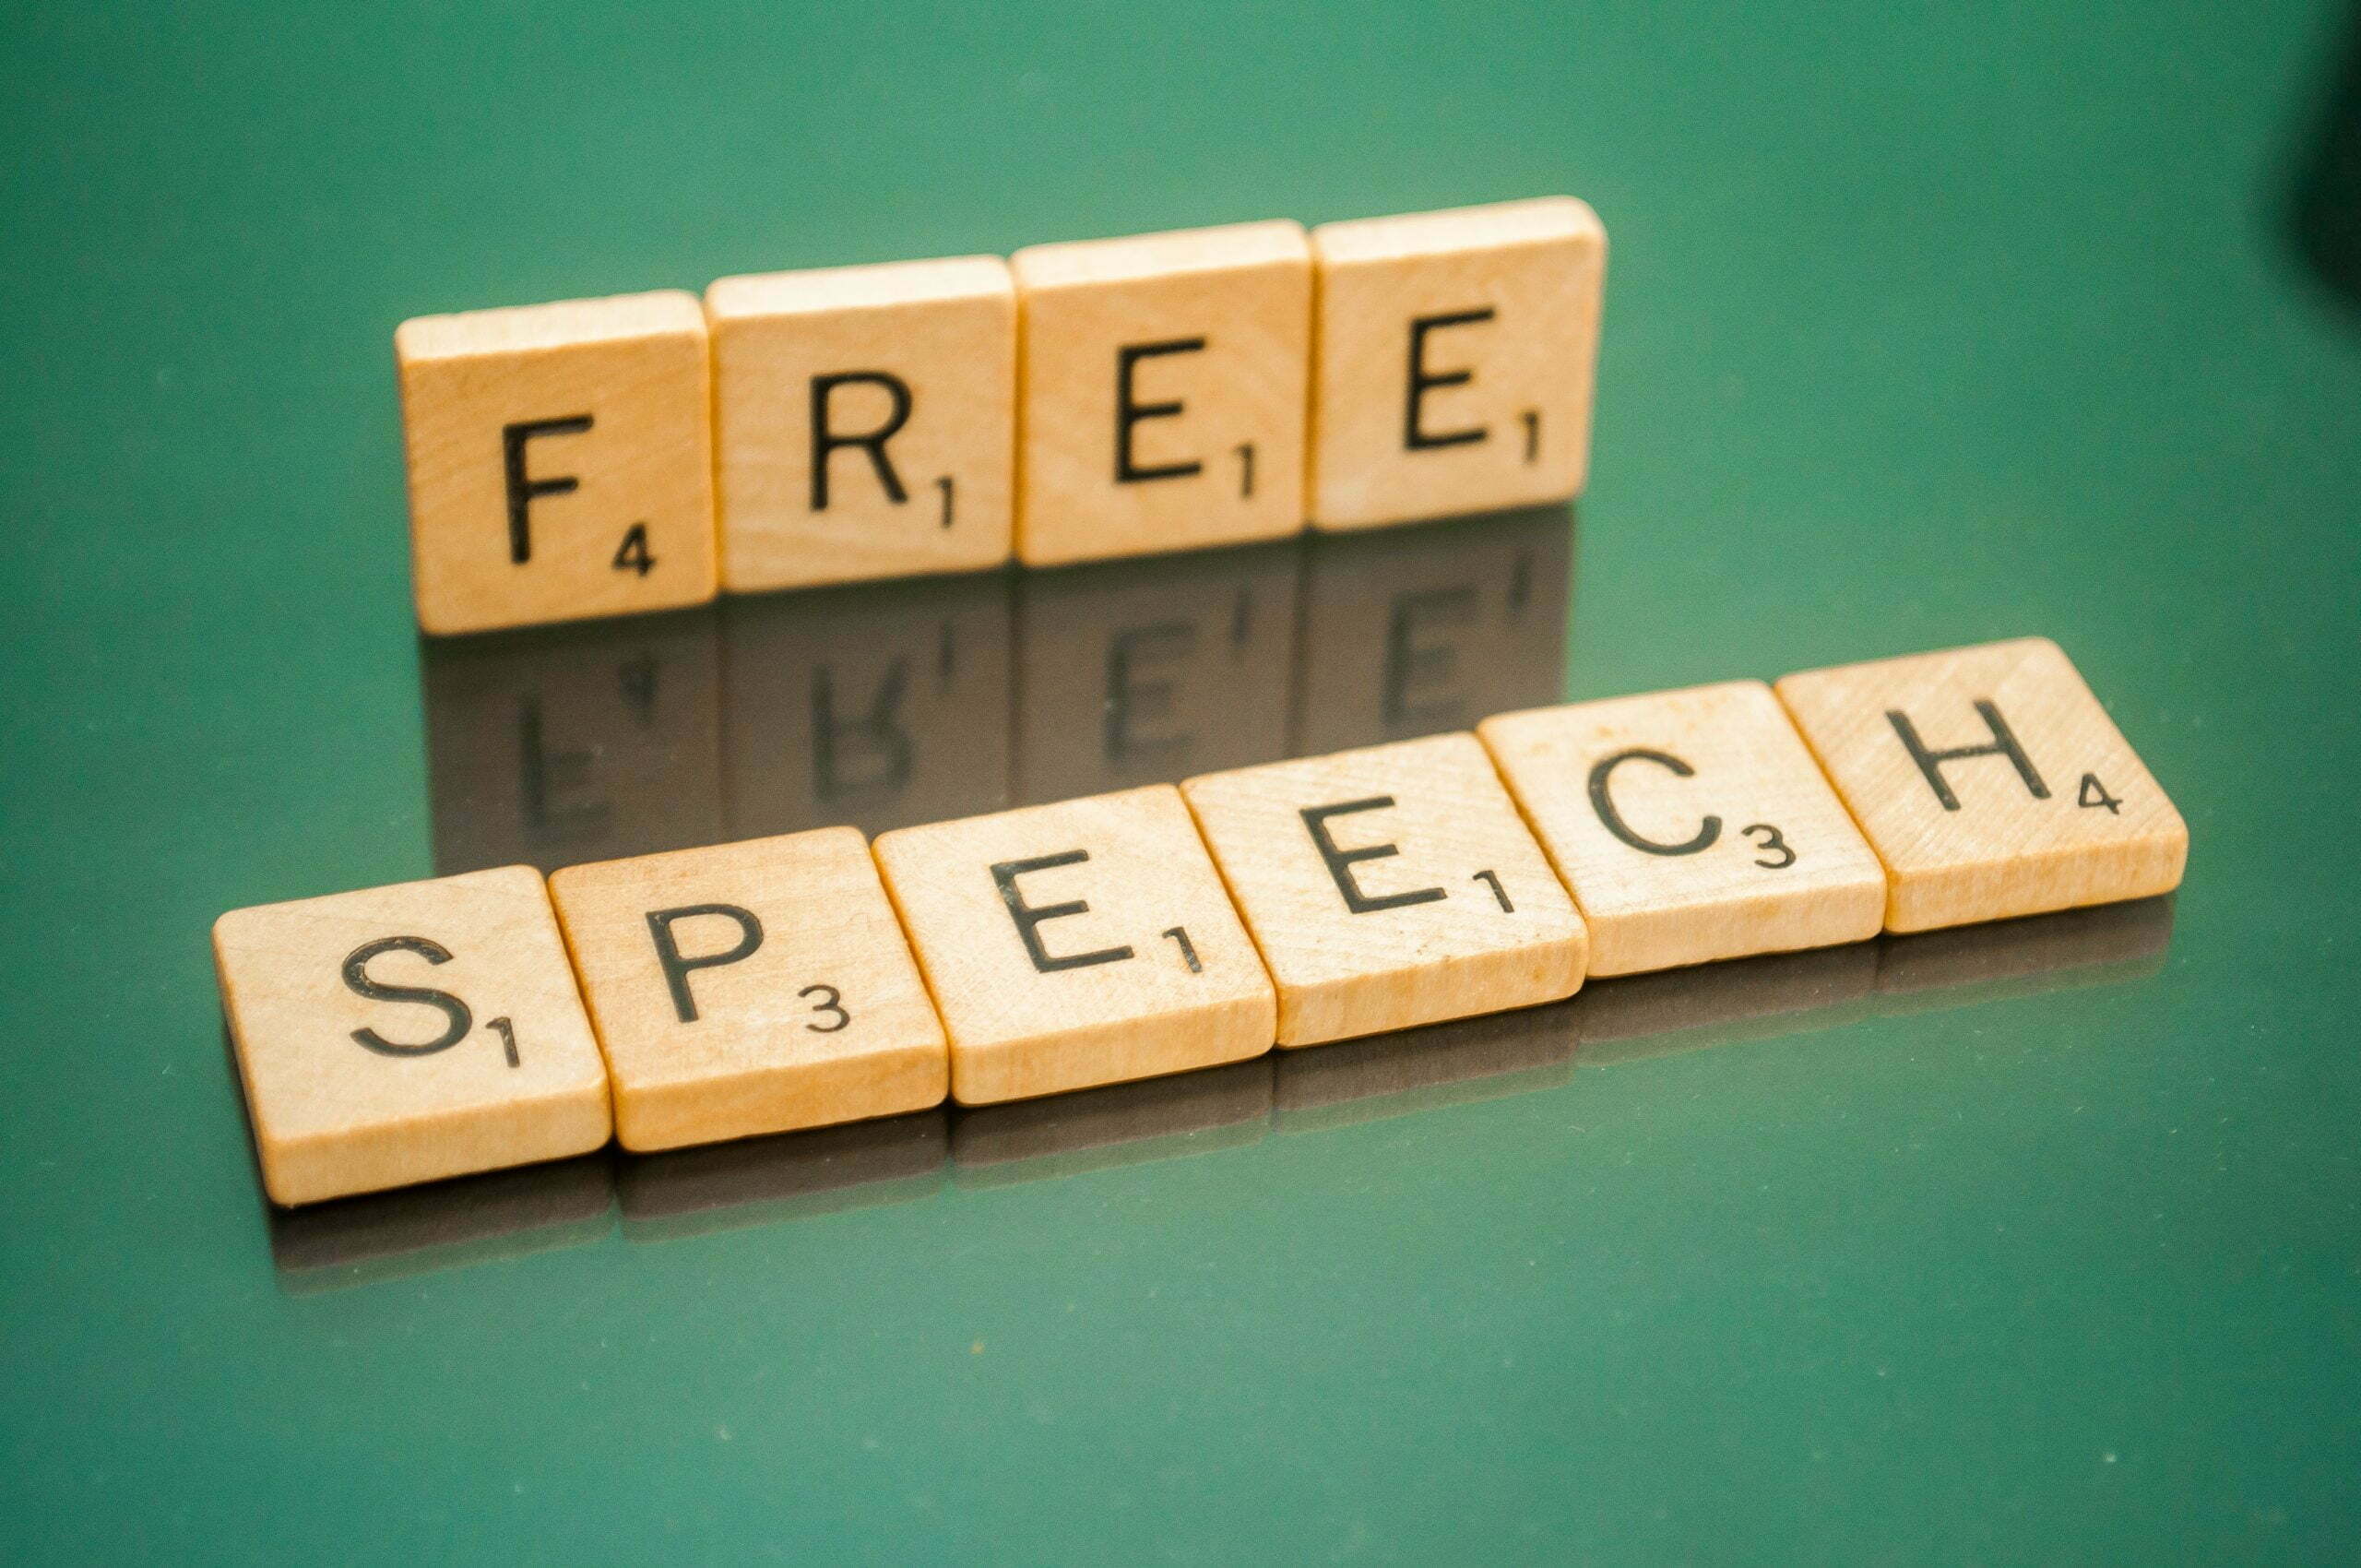 Free Speech on wooden blocks